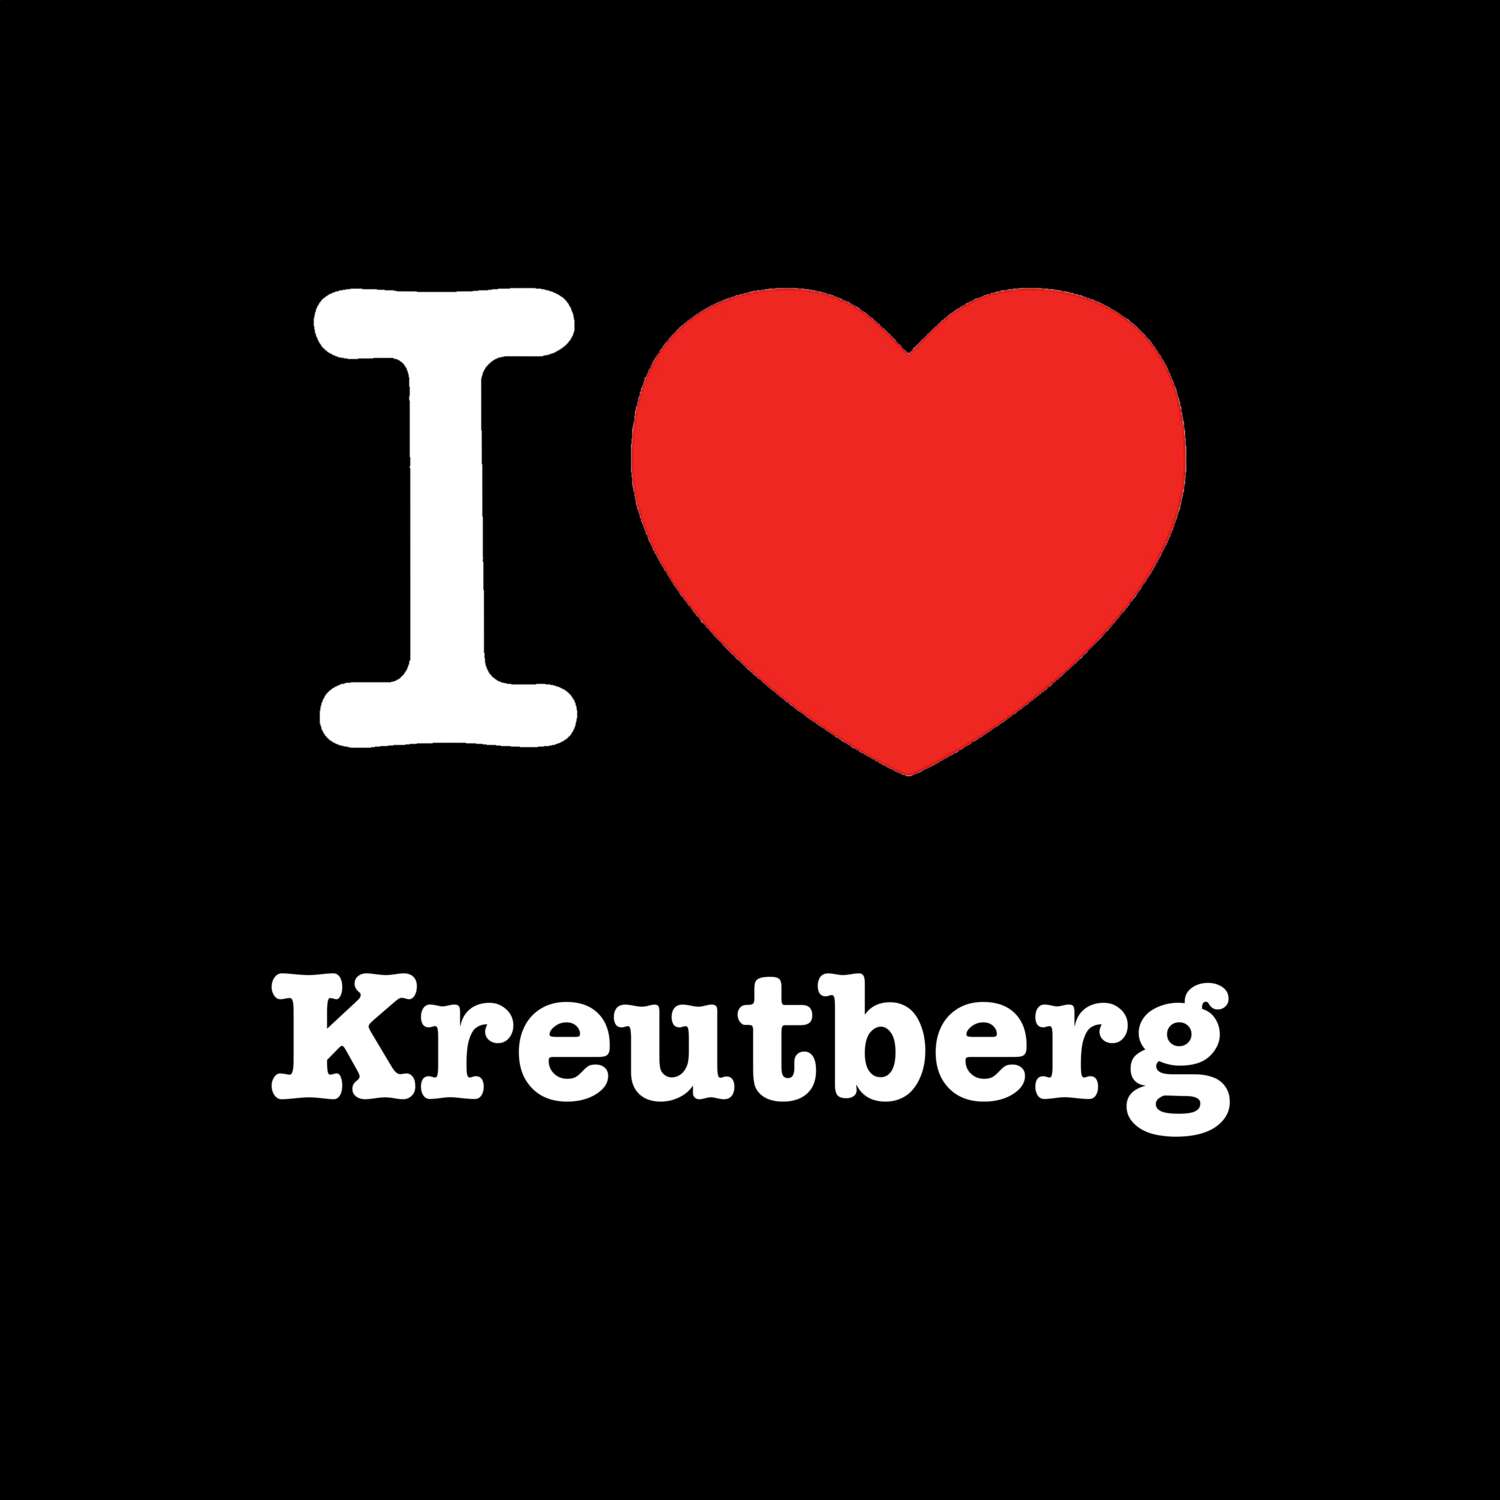 Kreutberg T-Shirt »I love«